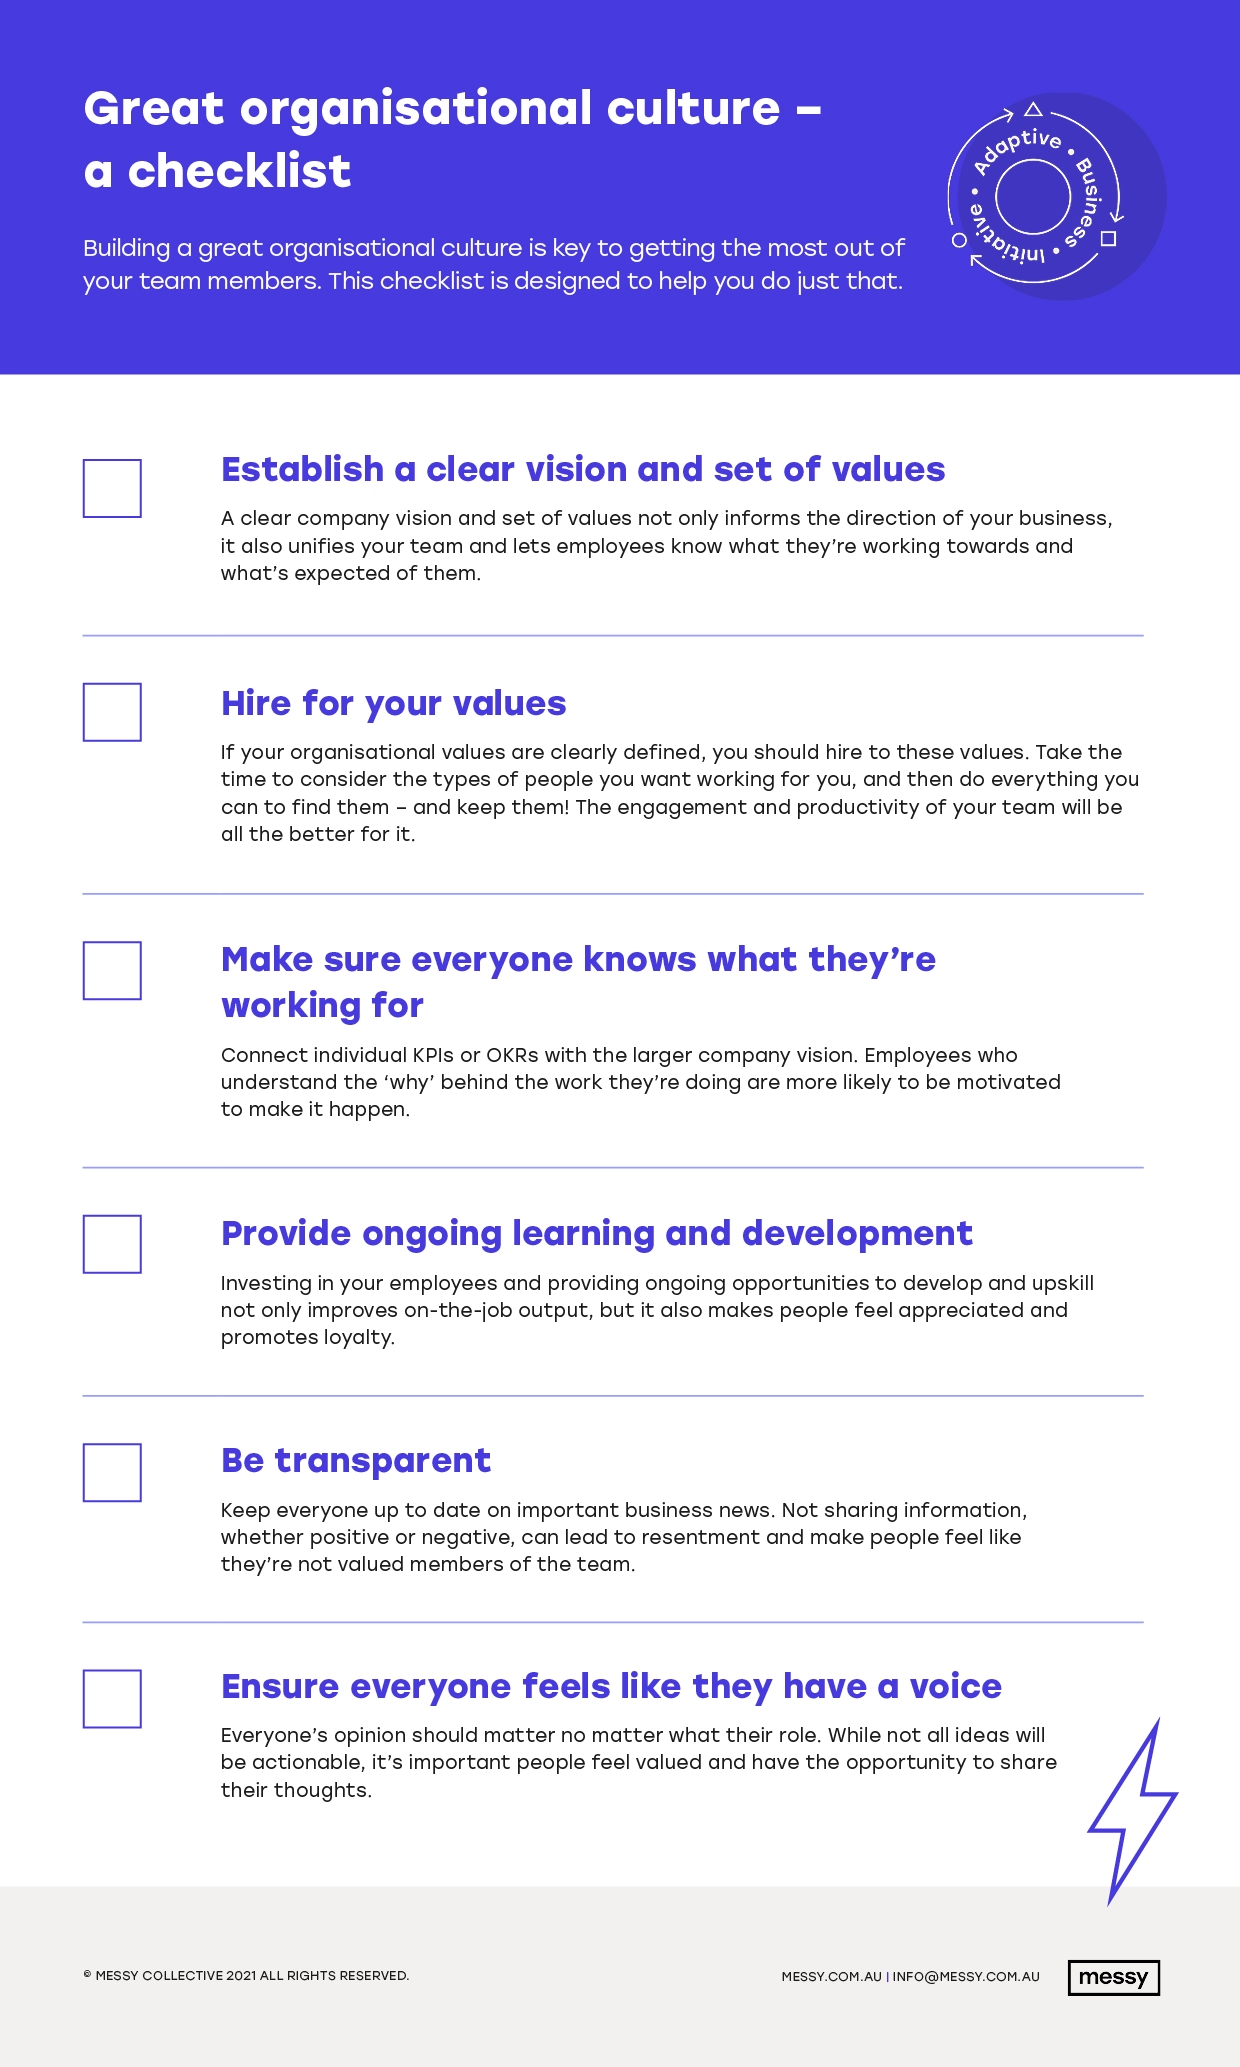 Great organisational values checklist